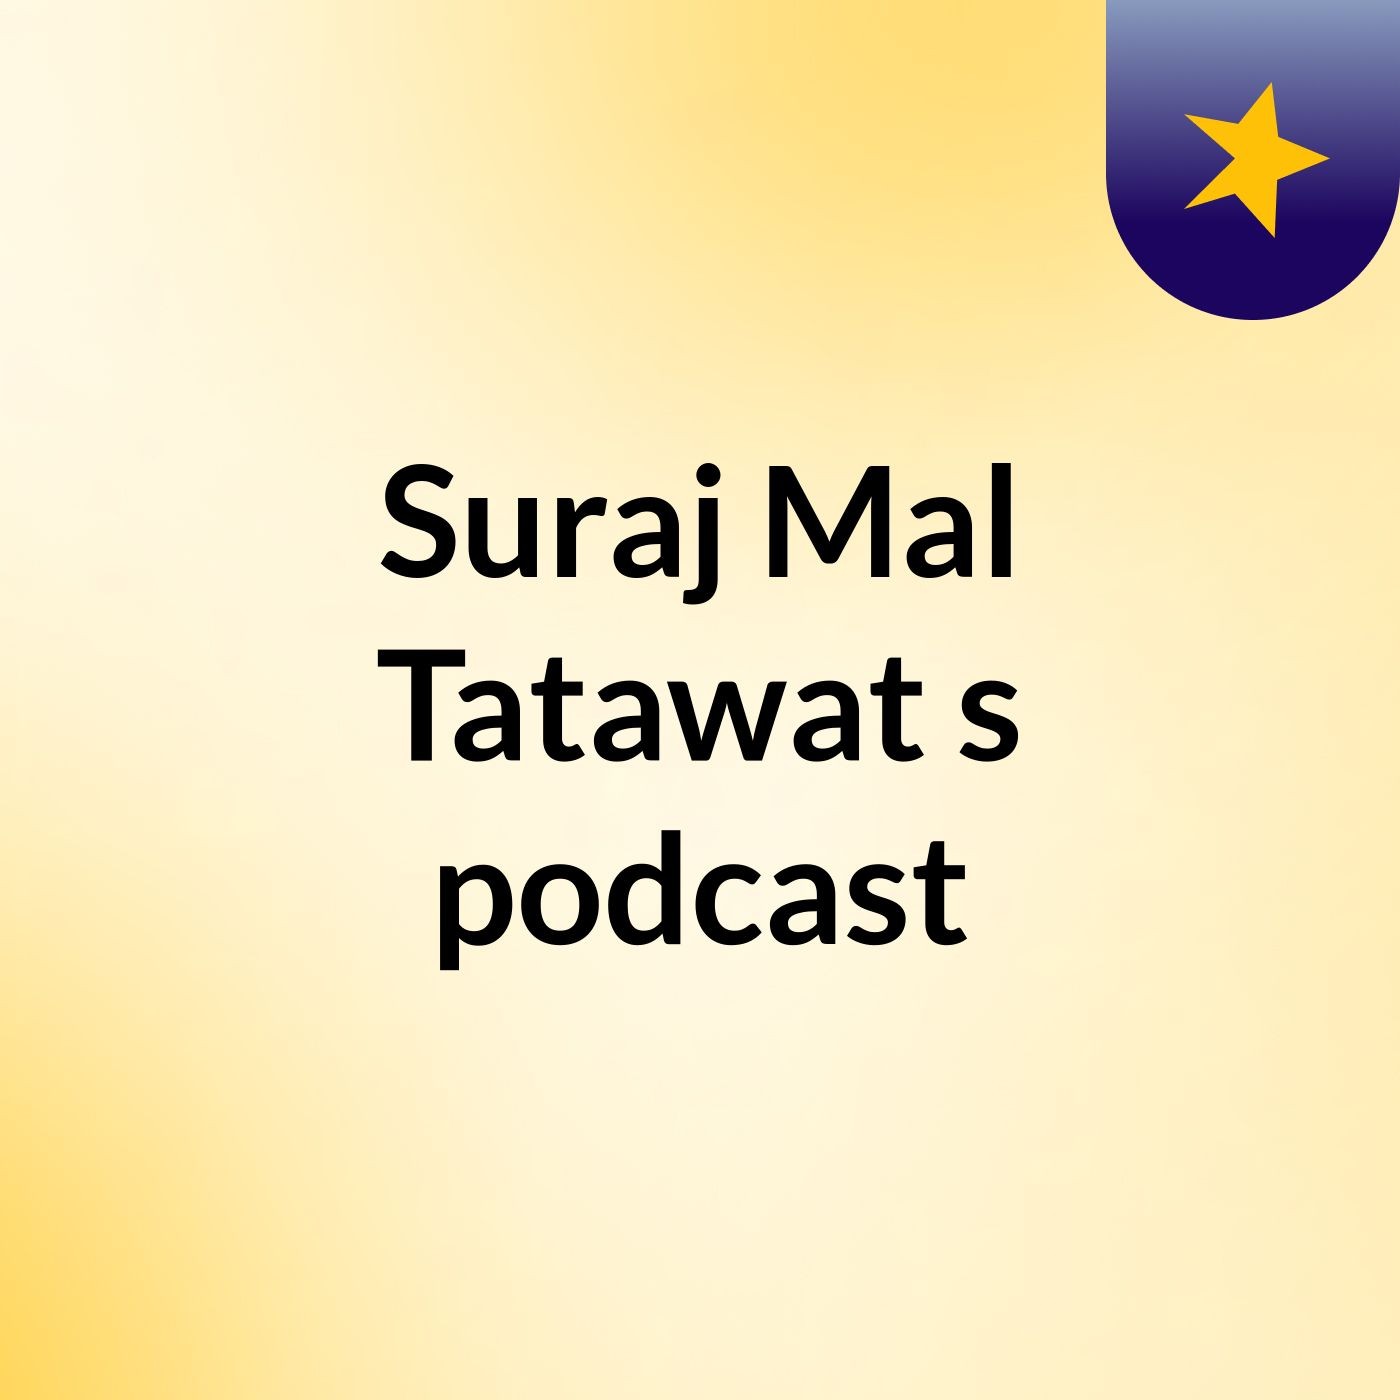 Episode 3 - Suraj Mal Tatawat's podcast